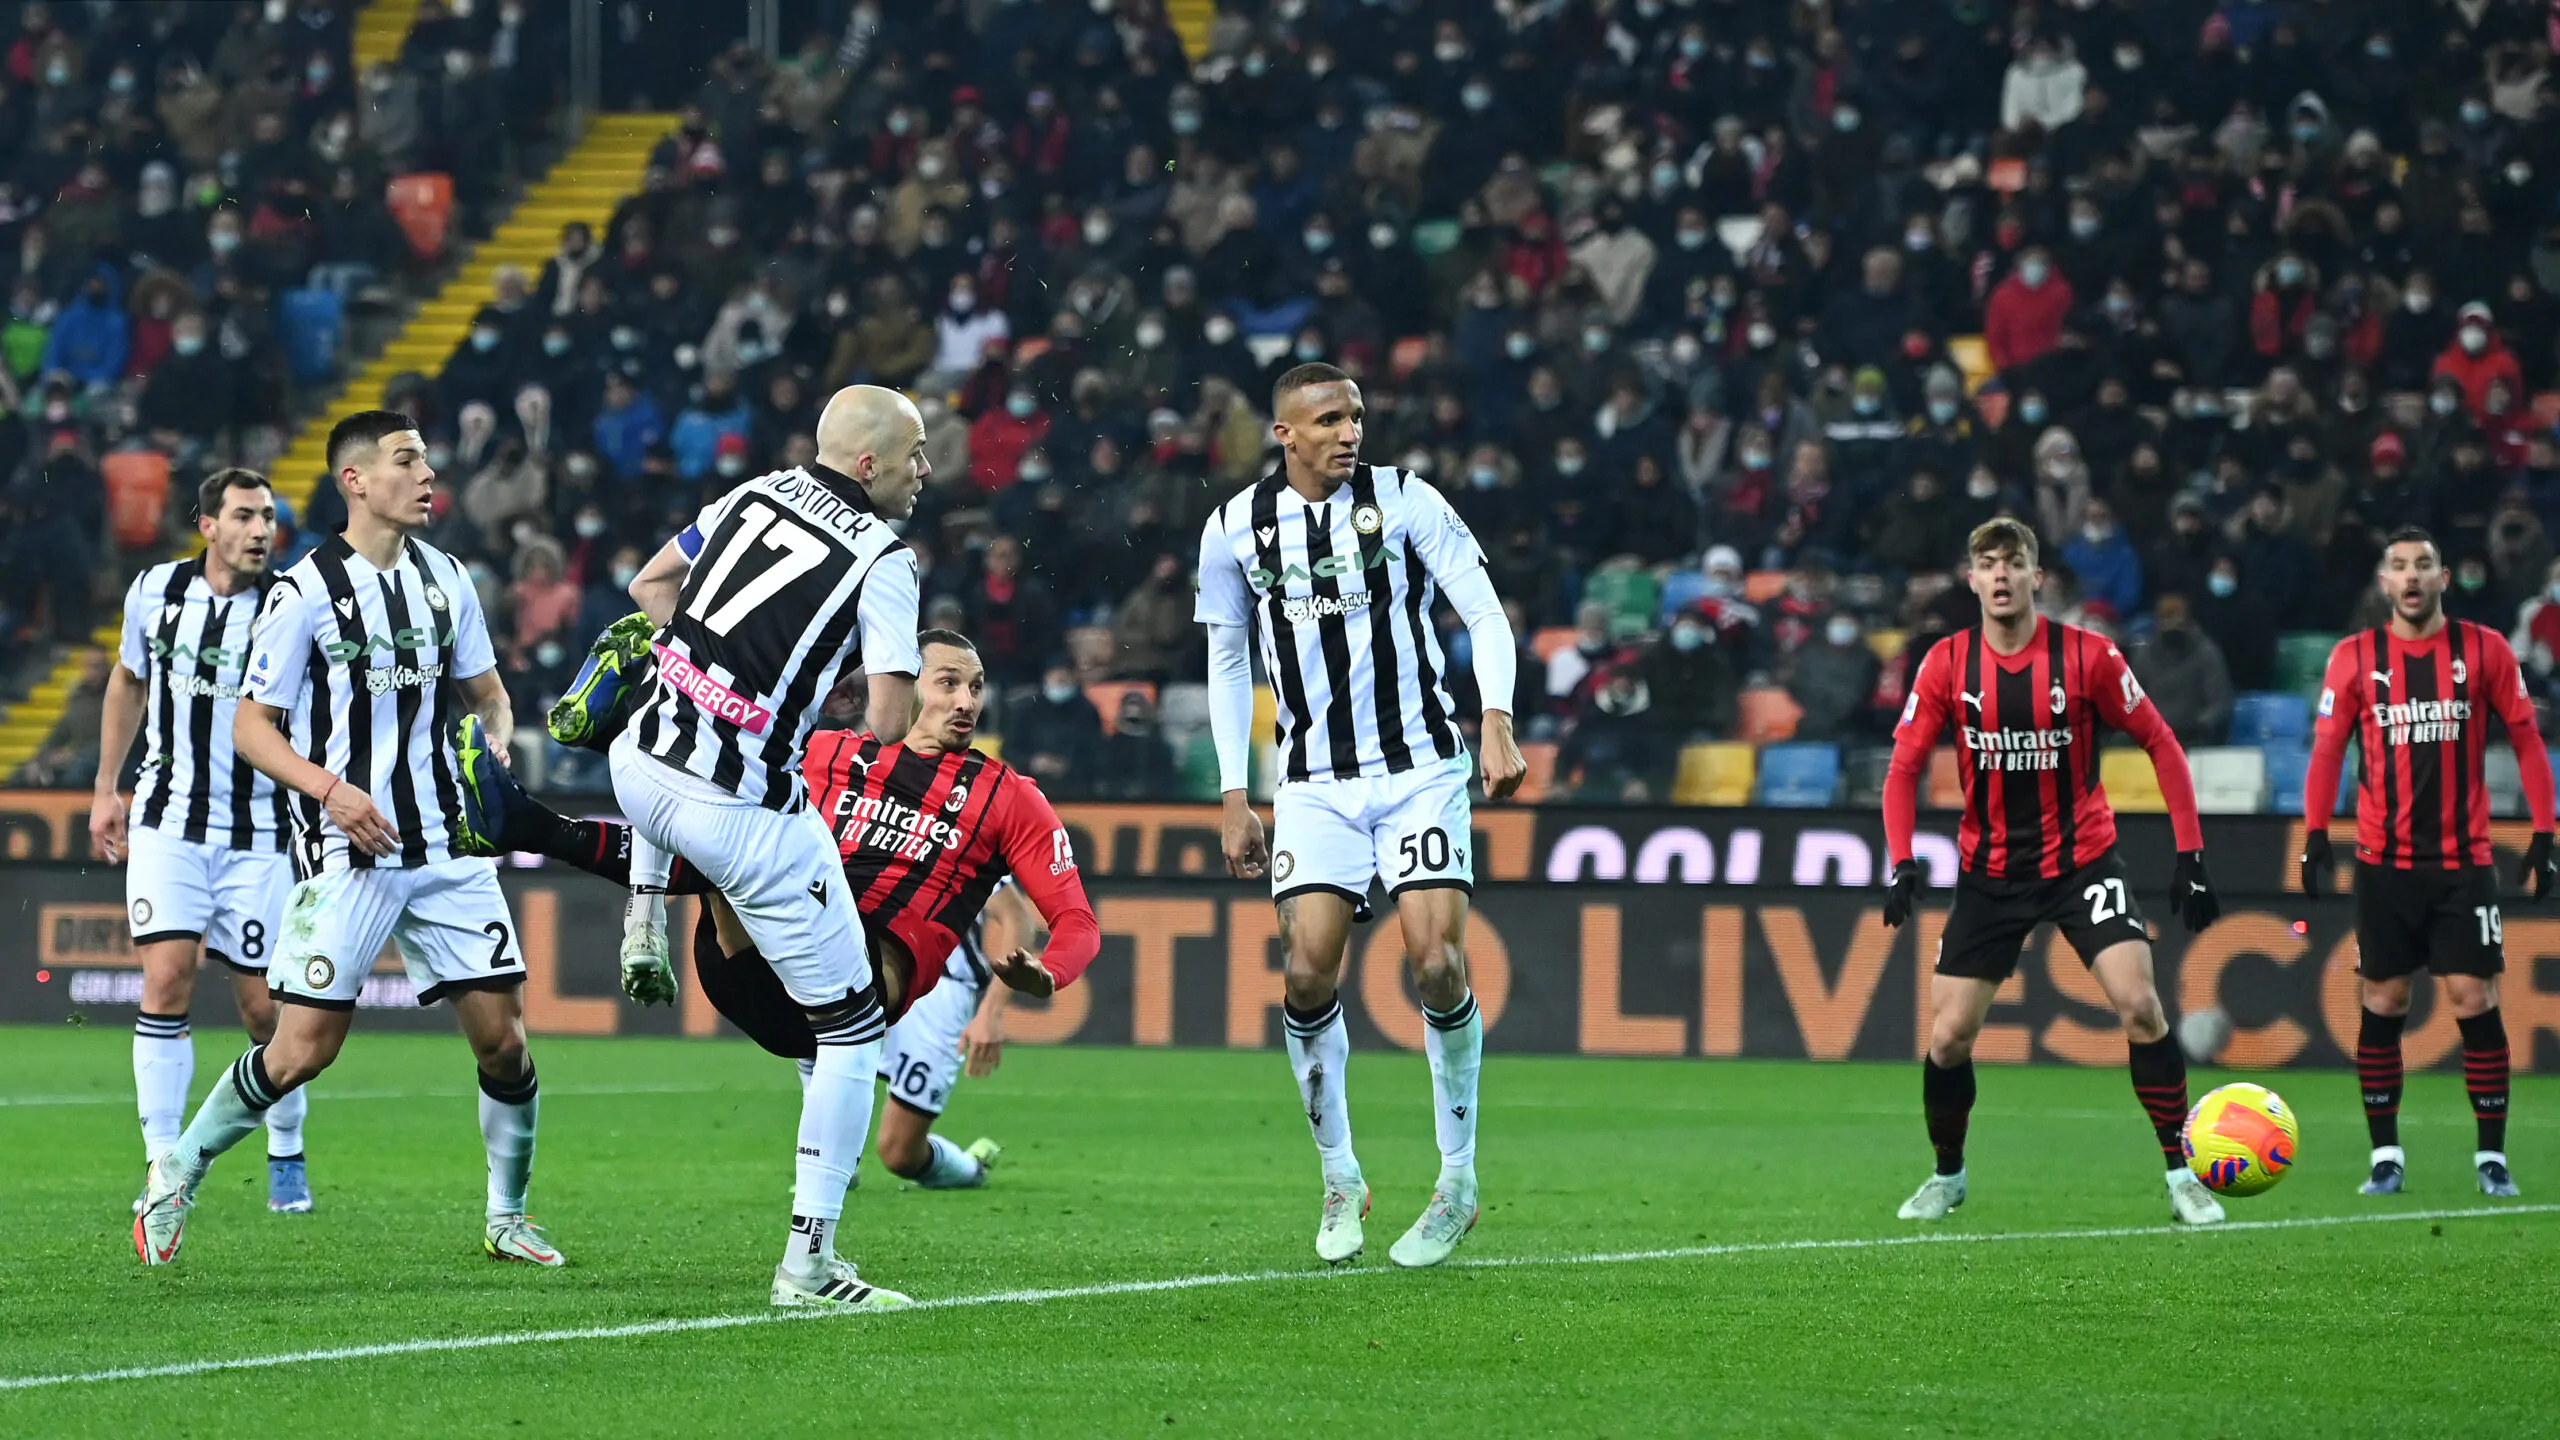 Brutte notizie in casa Udinese: 7 positivi al Covid